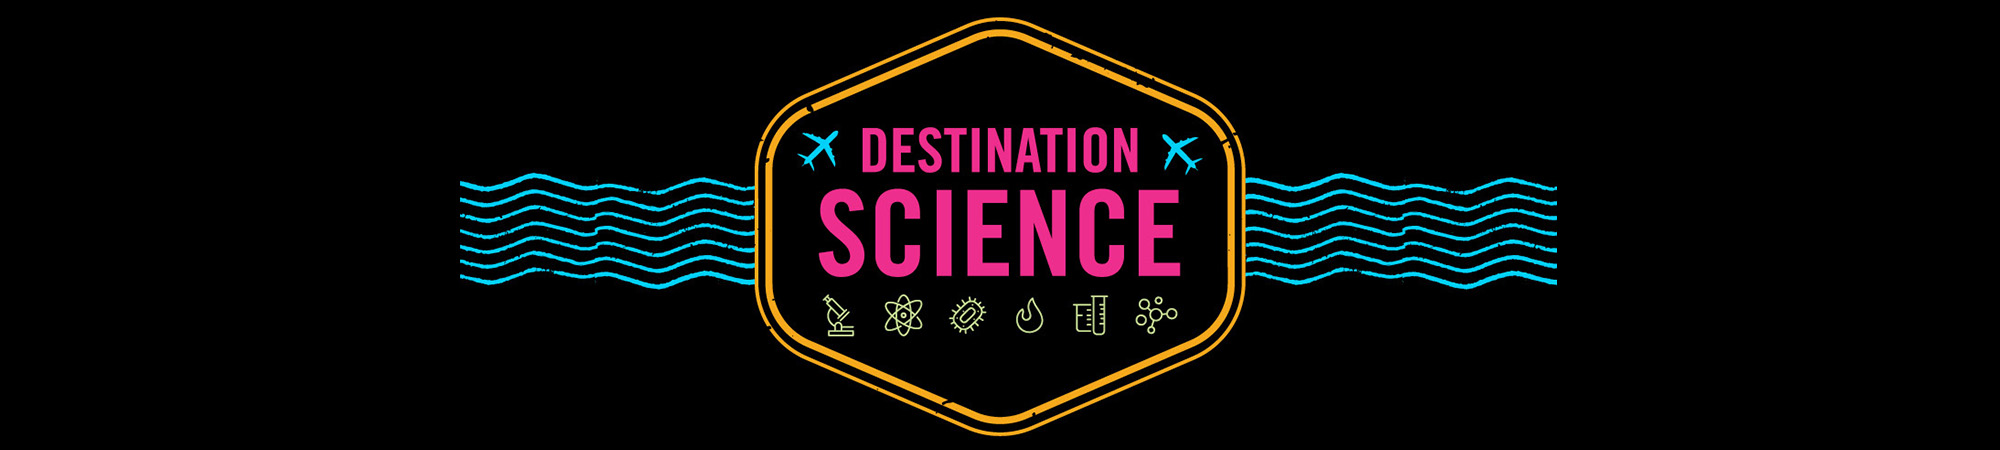 Destination Science